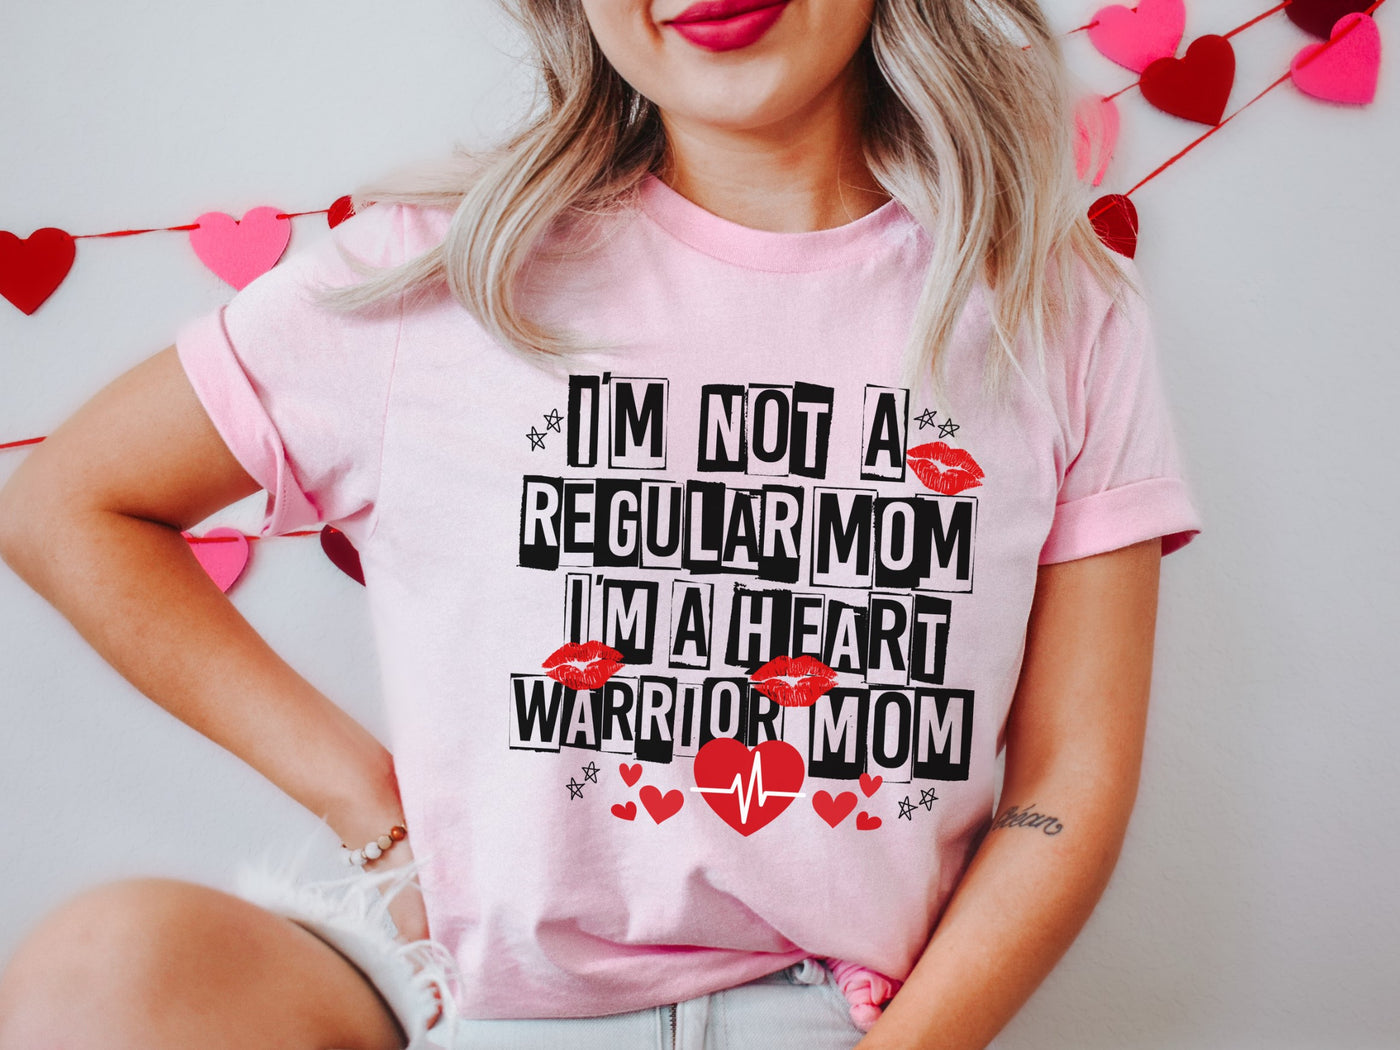 I'm not a regular mom, I'm a heart warrior mom (RTS 1/16)